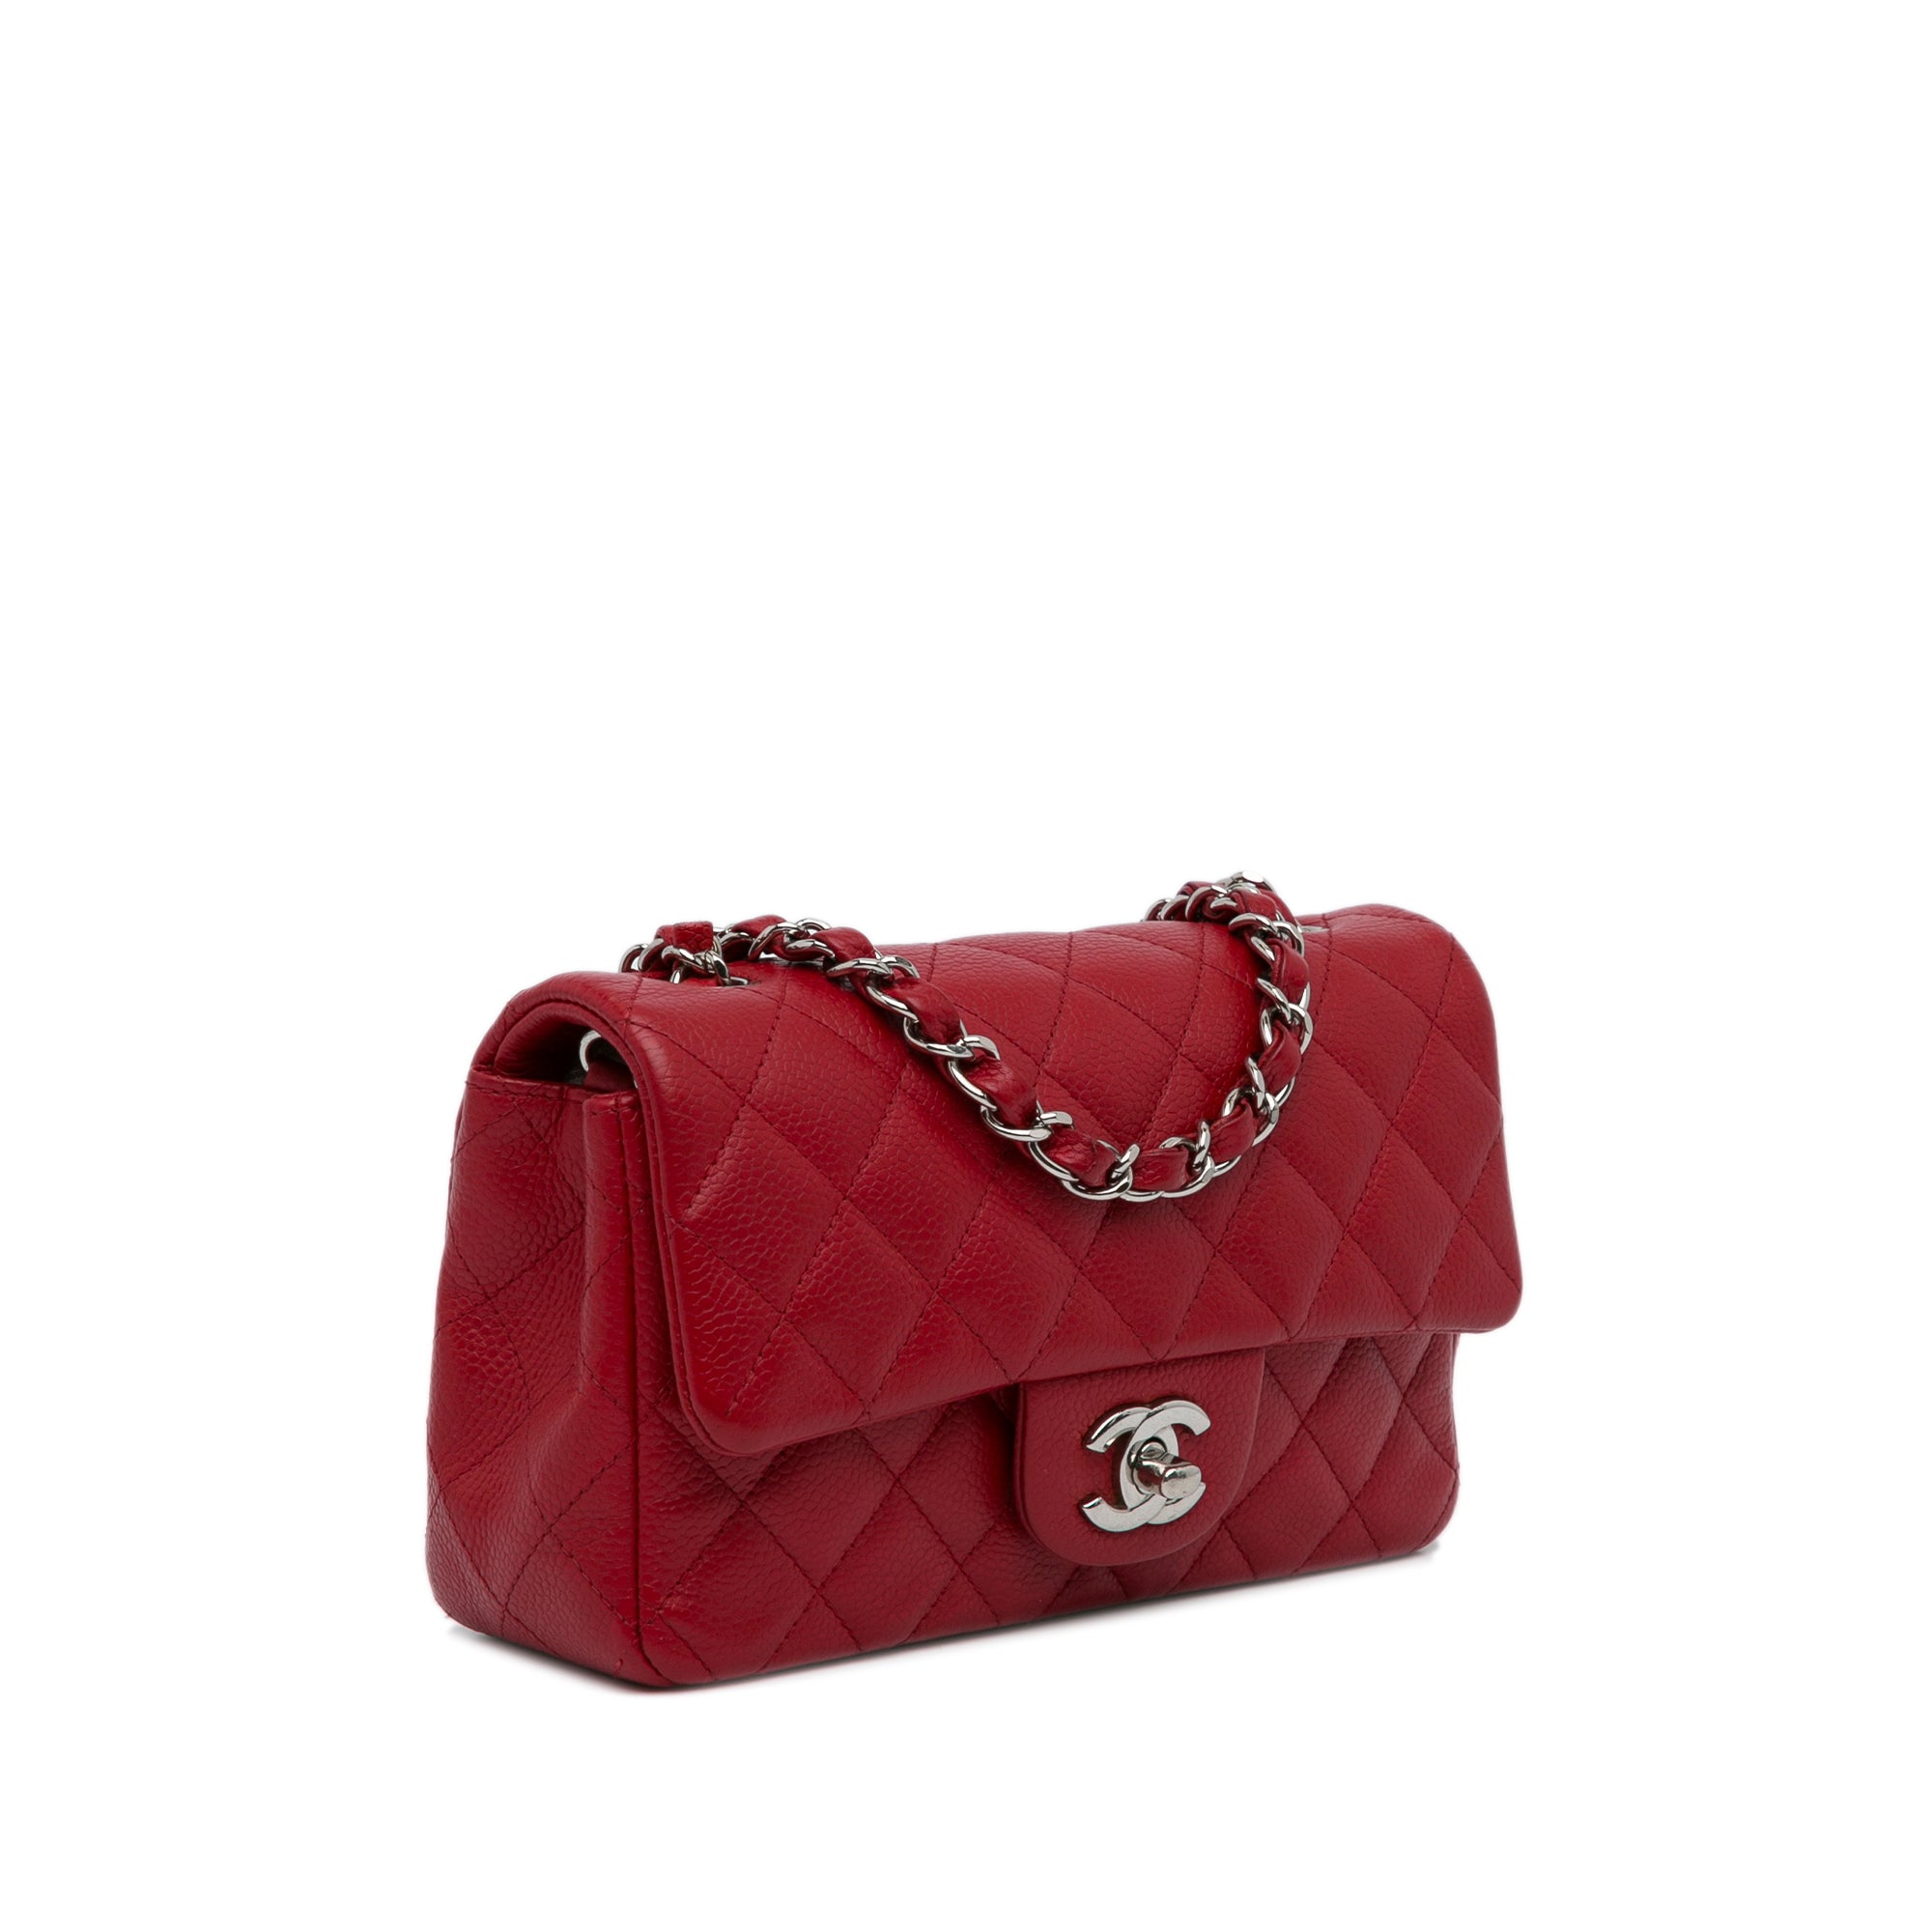 Timeless Chanel Classic Mini Flap Crossbody Bag Brown Beige